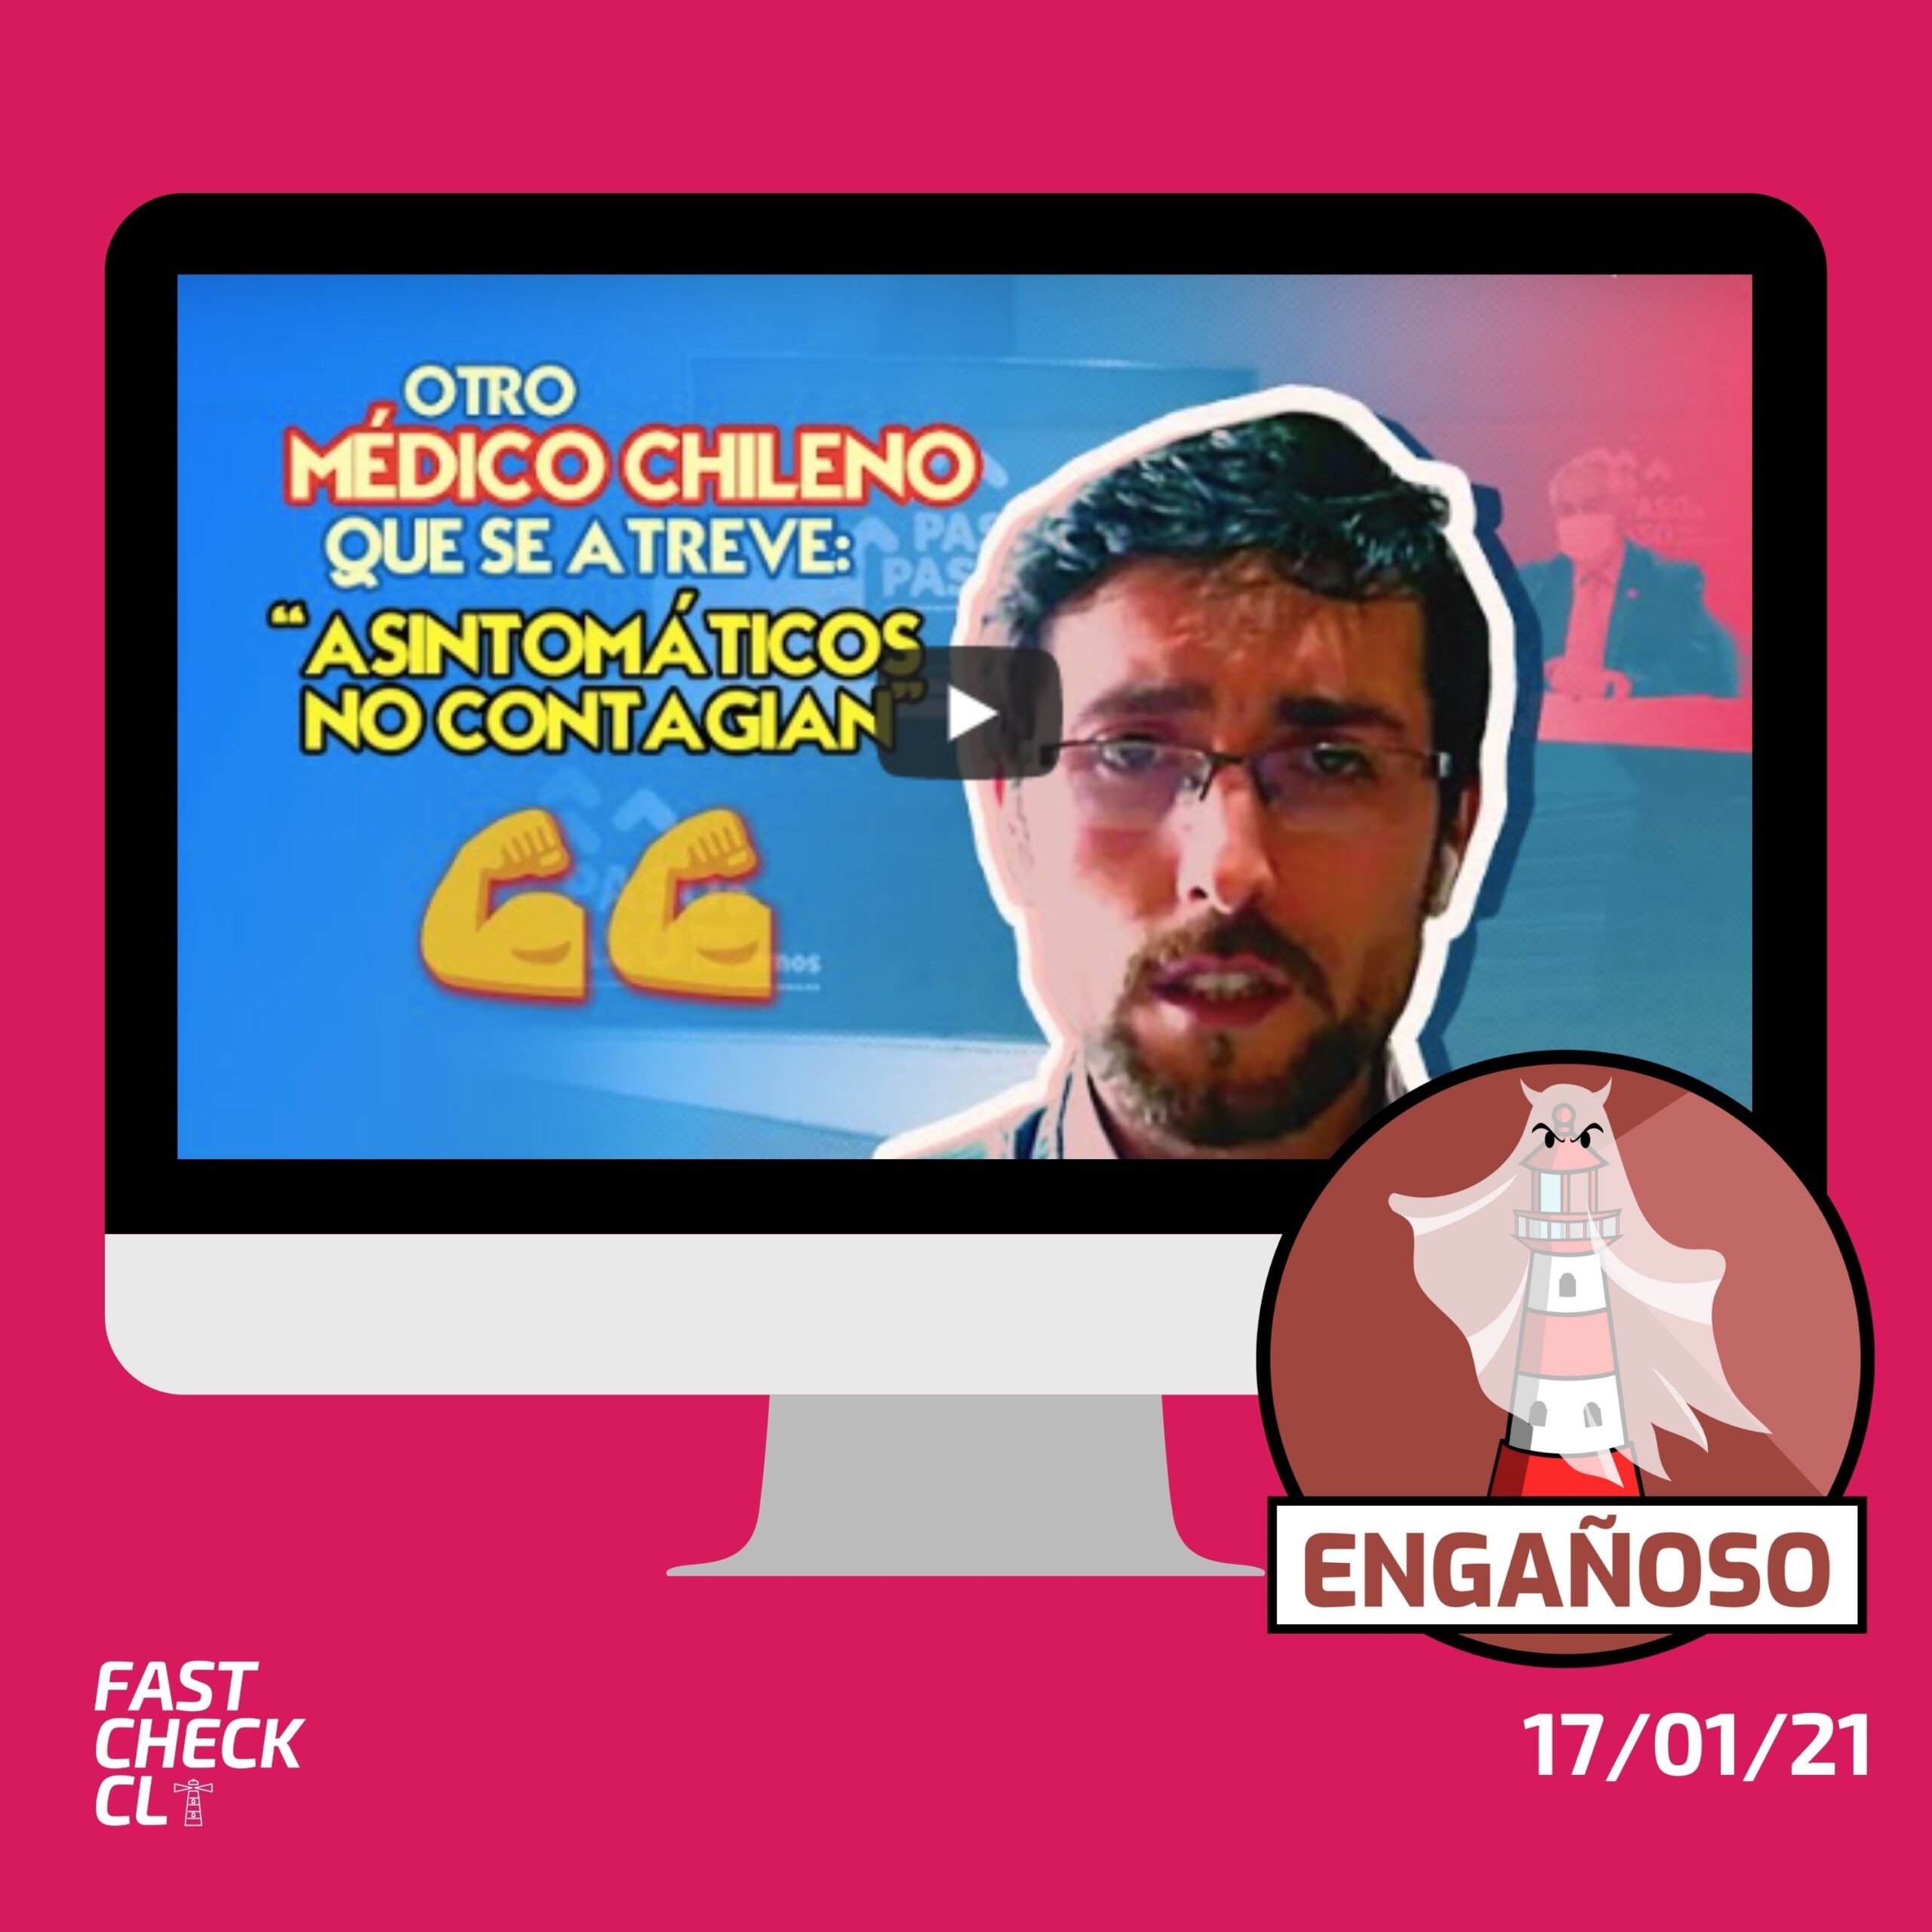 You are currently viewing (Video Dan Macías) “Asintomáticos no contagian”: #Engañoso